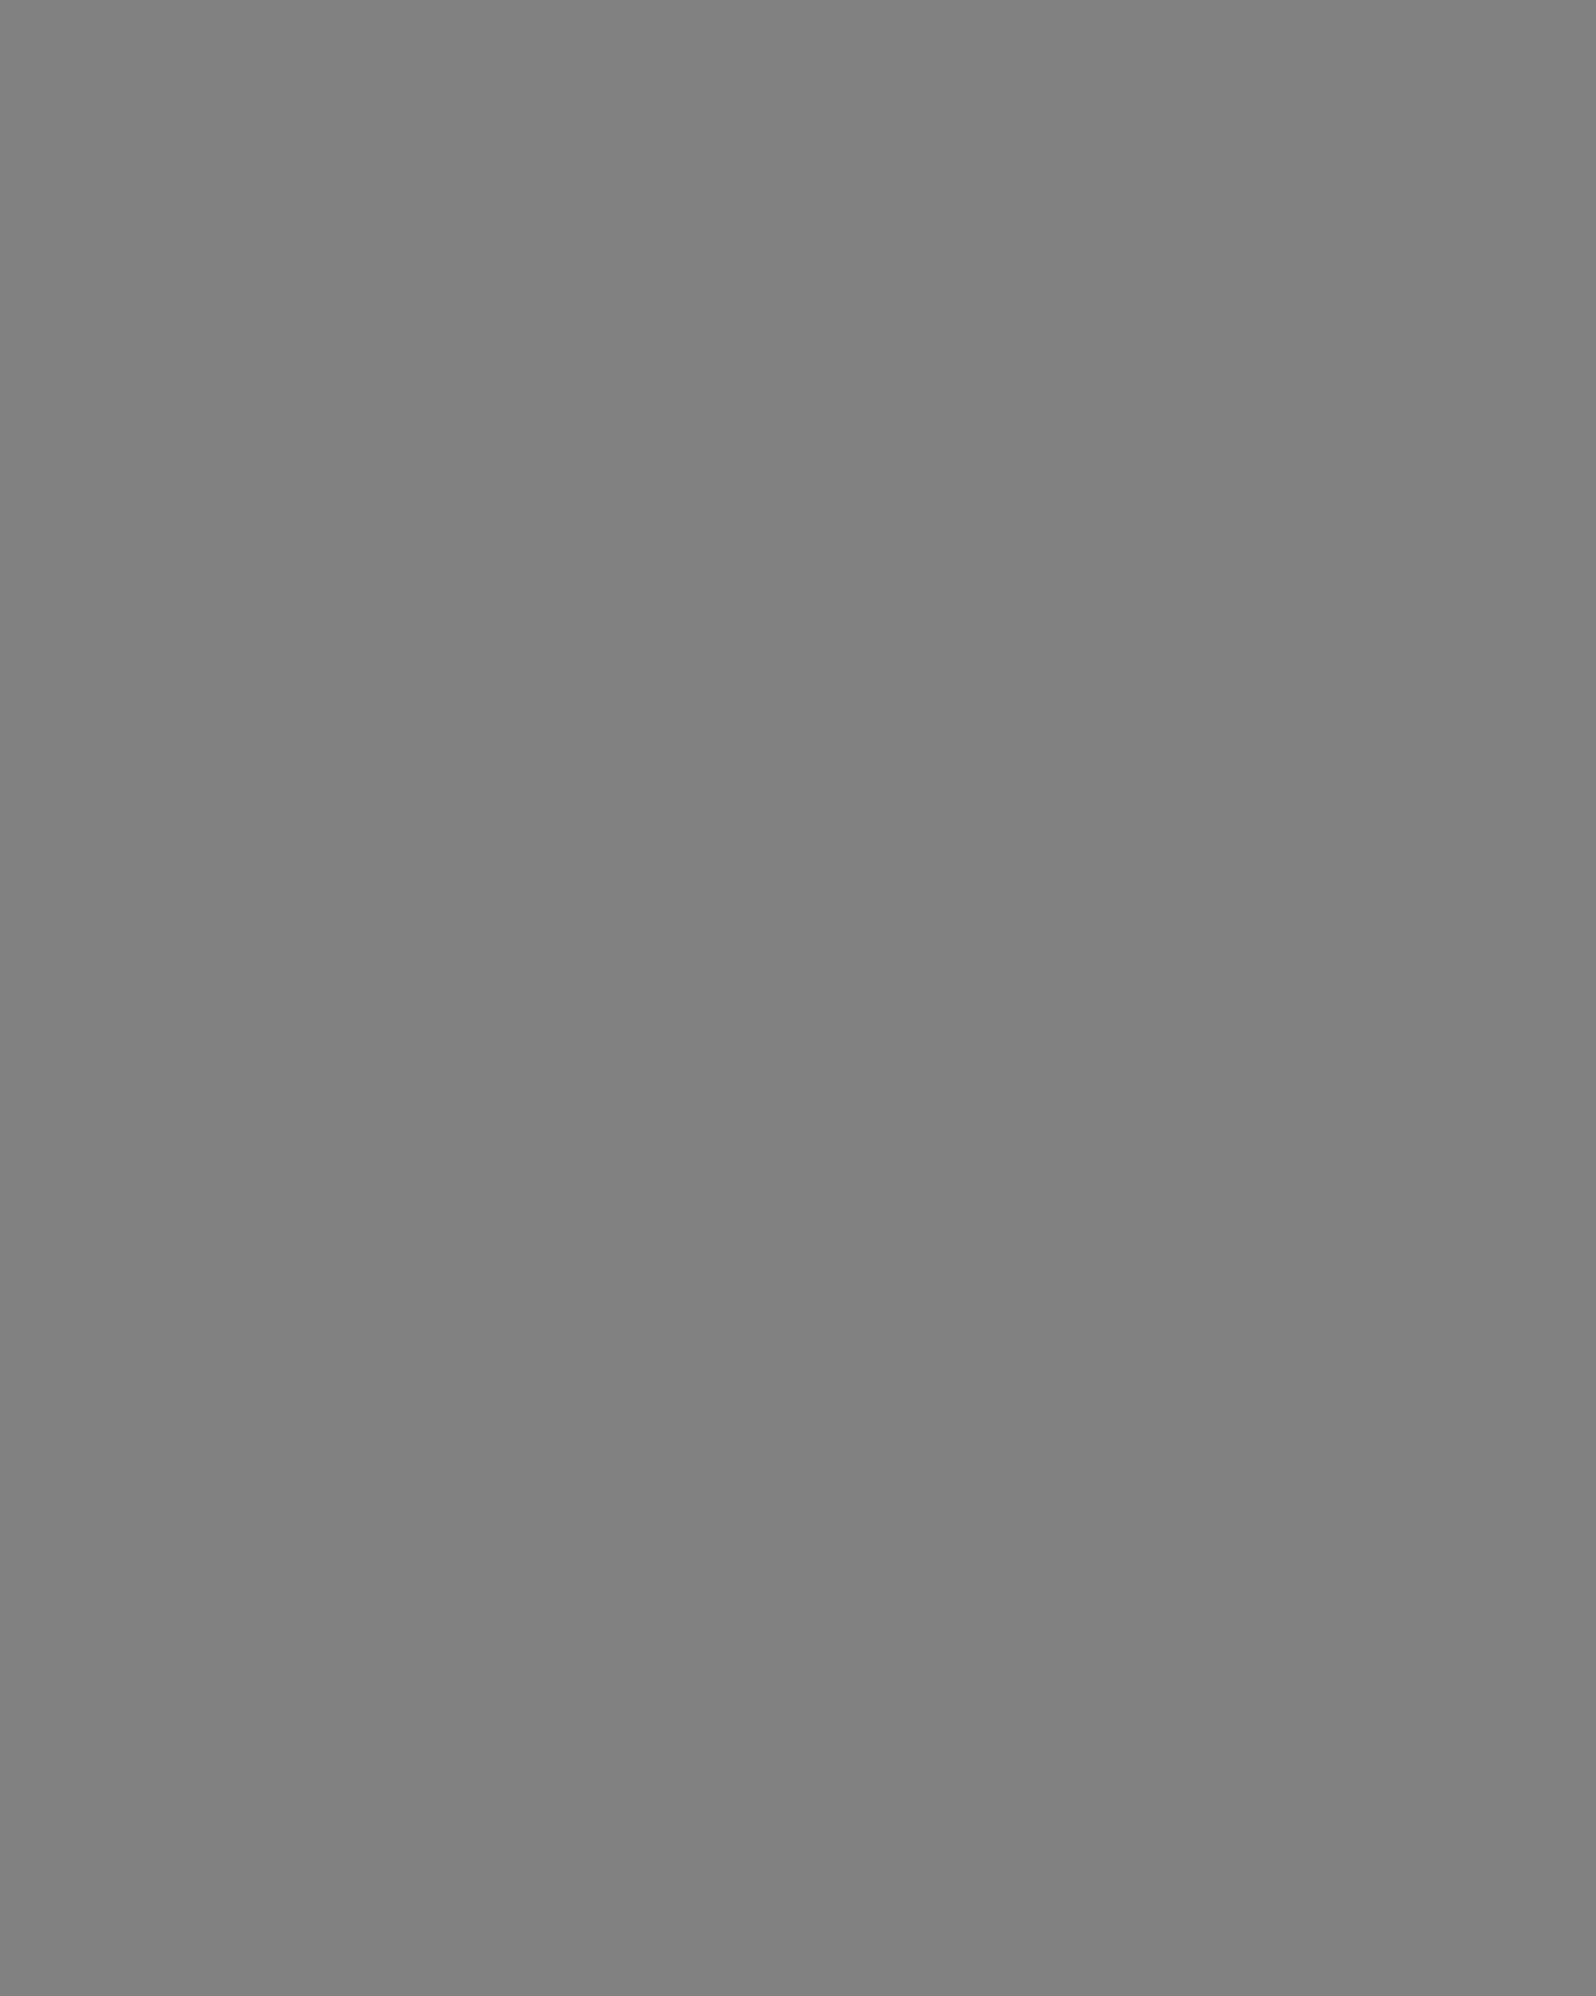 Строительство гостиницы «Центральная», Пермь. с 1931 по 1933. Фотография: Toshishiro / <a href="https://commons.wikimedia.org/w/index.php?curid=61129271" target="_blank" rel="noopener">commons.wikimedia</a> / Public Domain